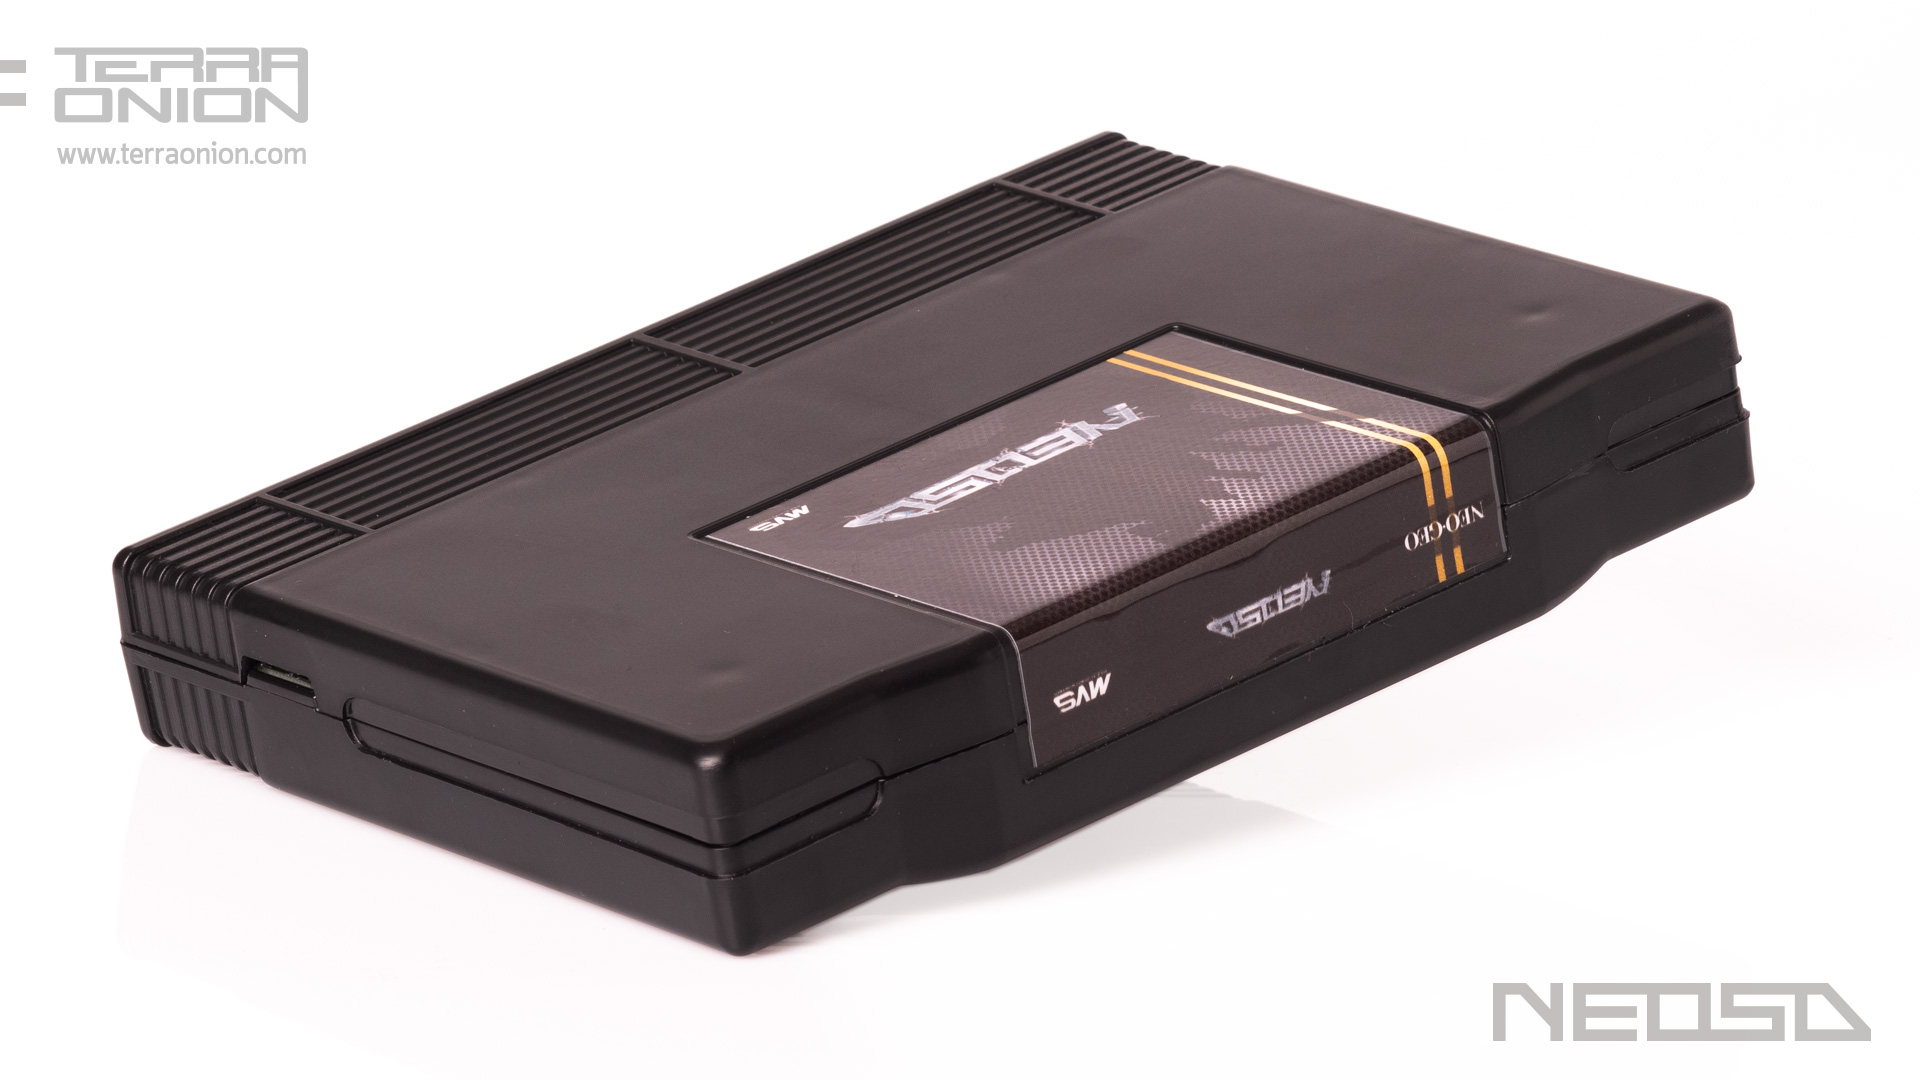 <b>The first flash cartridge</b> for Neo Geo MVS